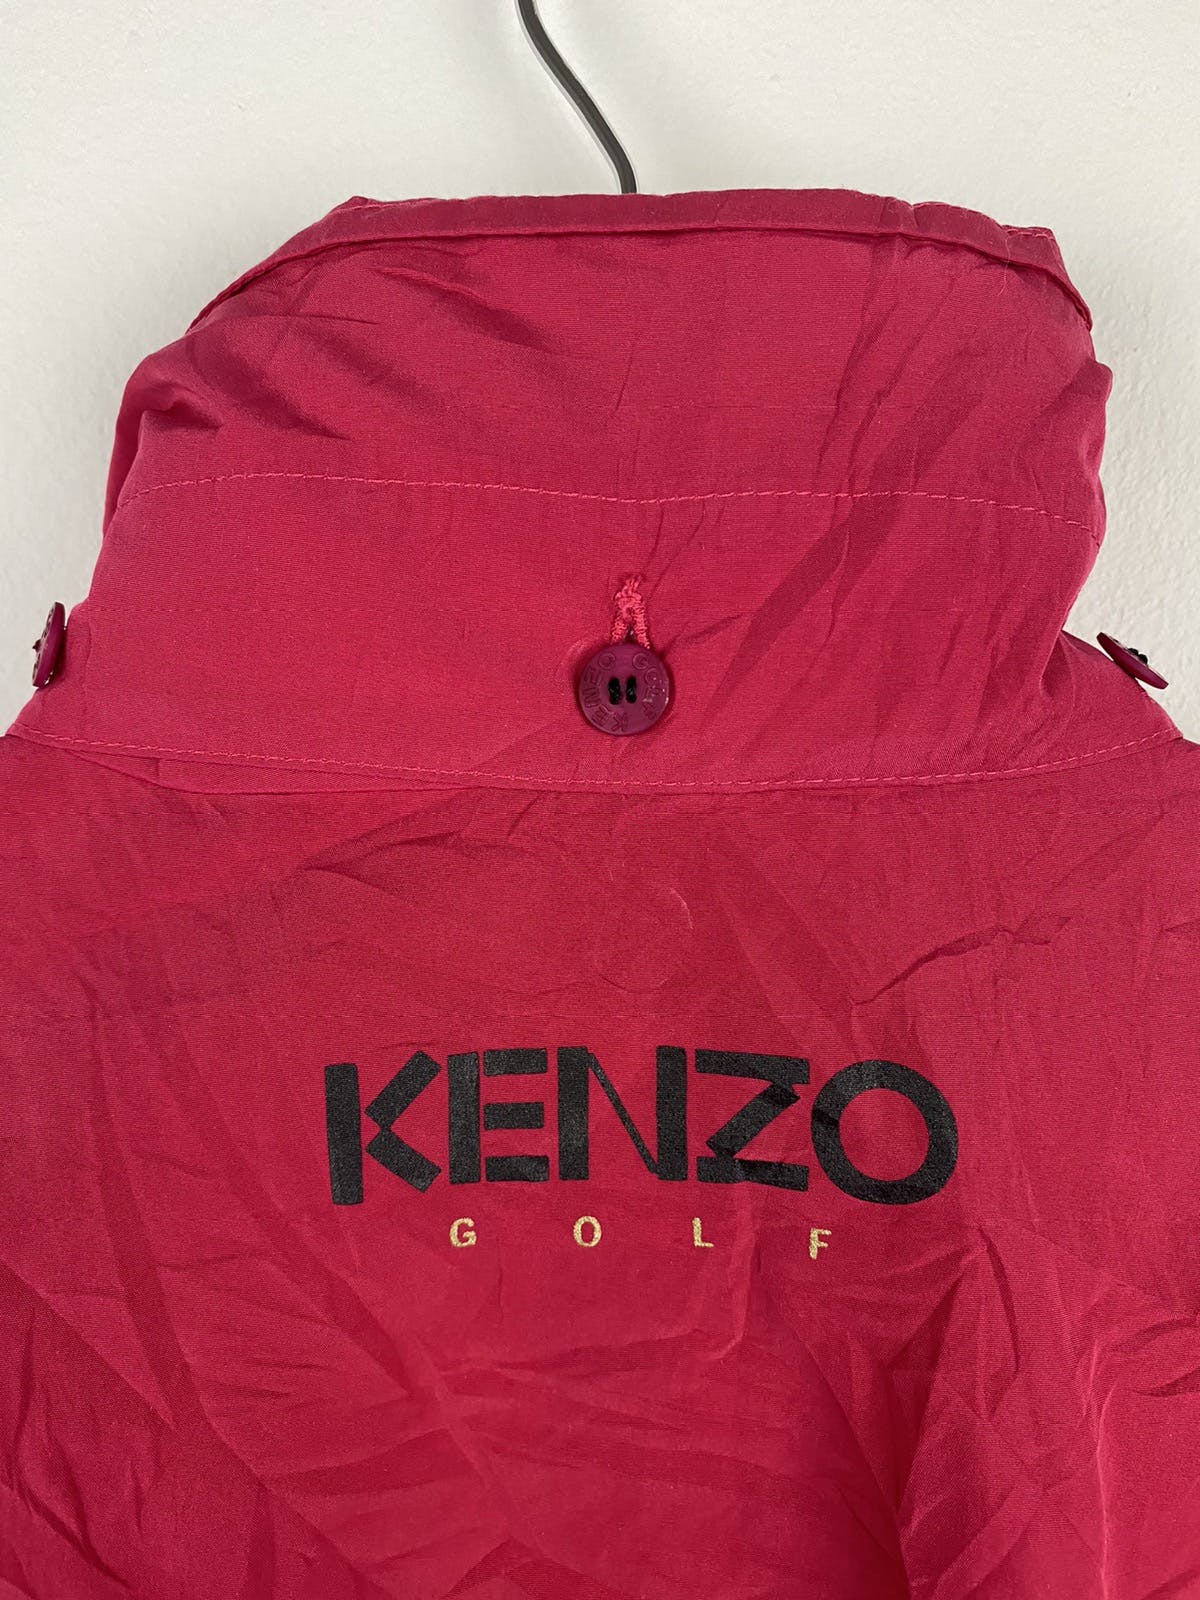 Kenzo Golf Light Jacket - 14